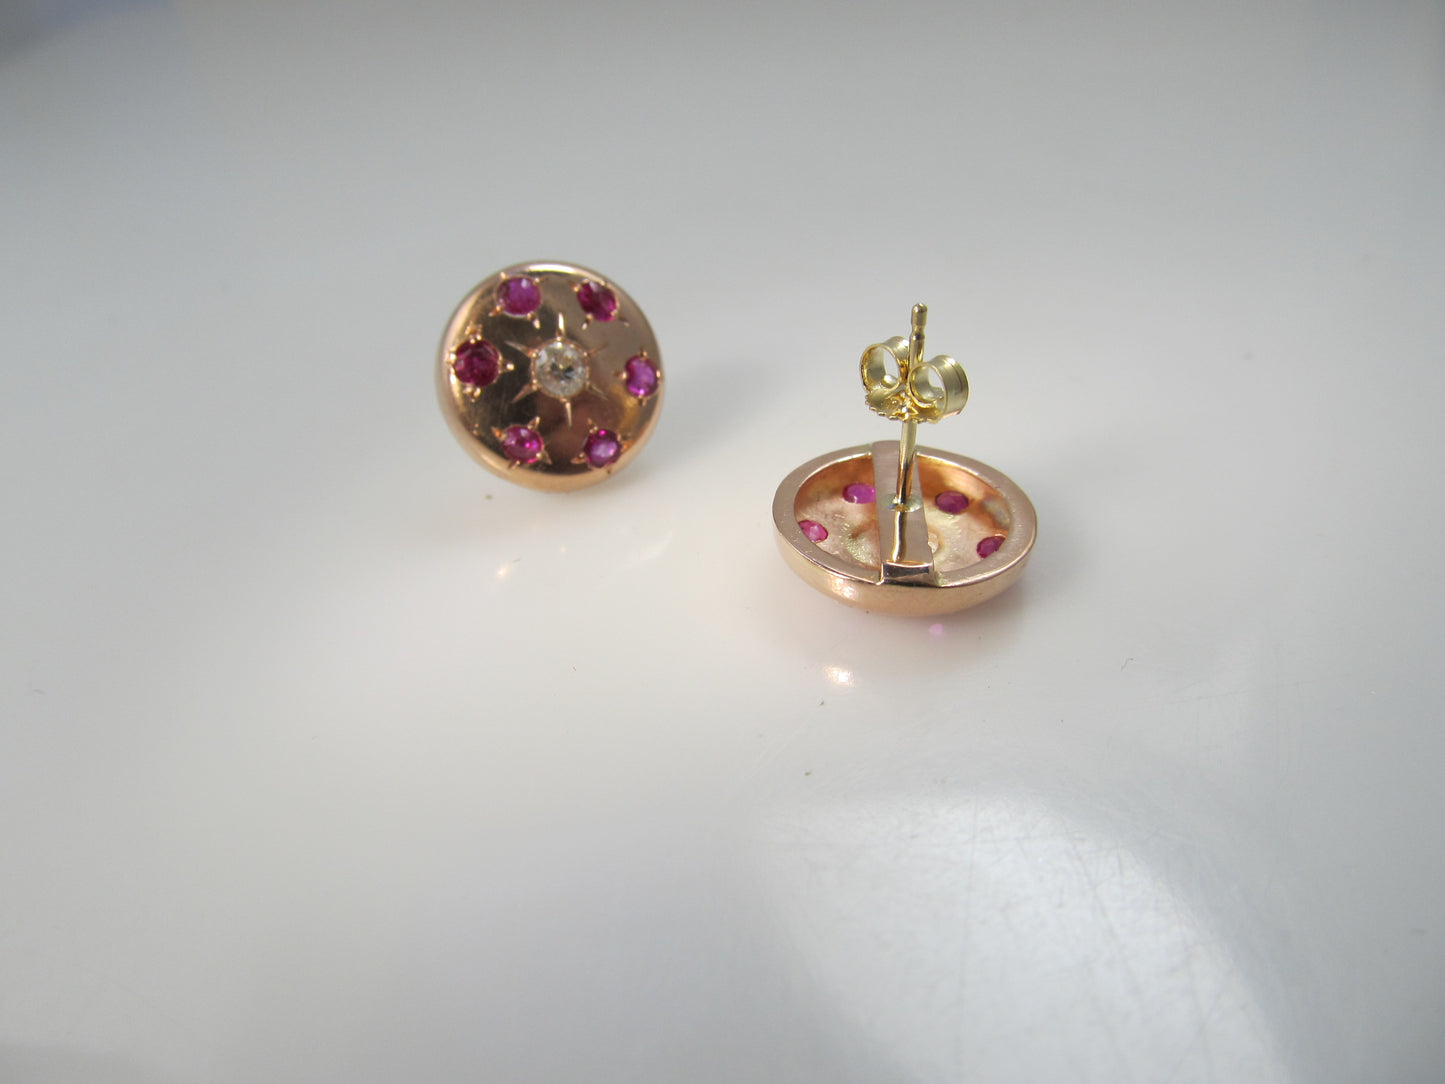 Antique 14k rose gold ruby and diamodn earrings